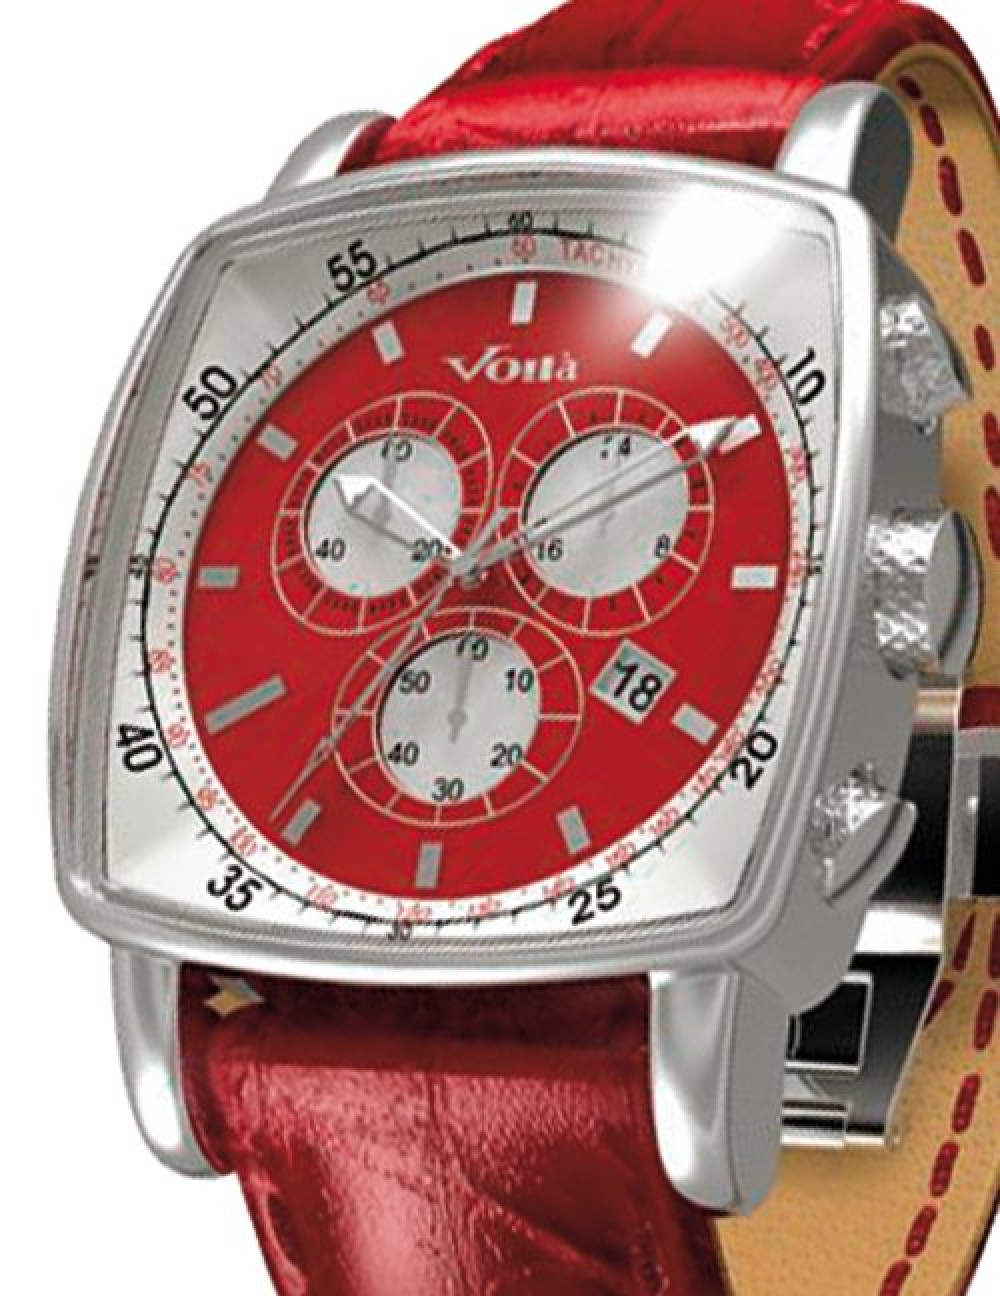 Zegarek firmy voila, model Chevalier Chrono